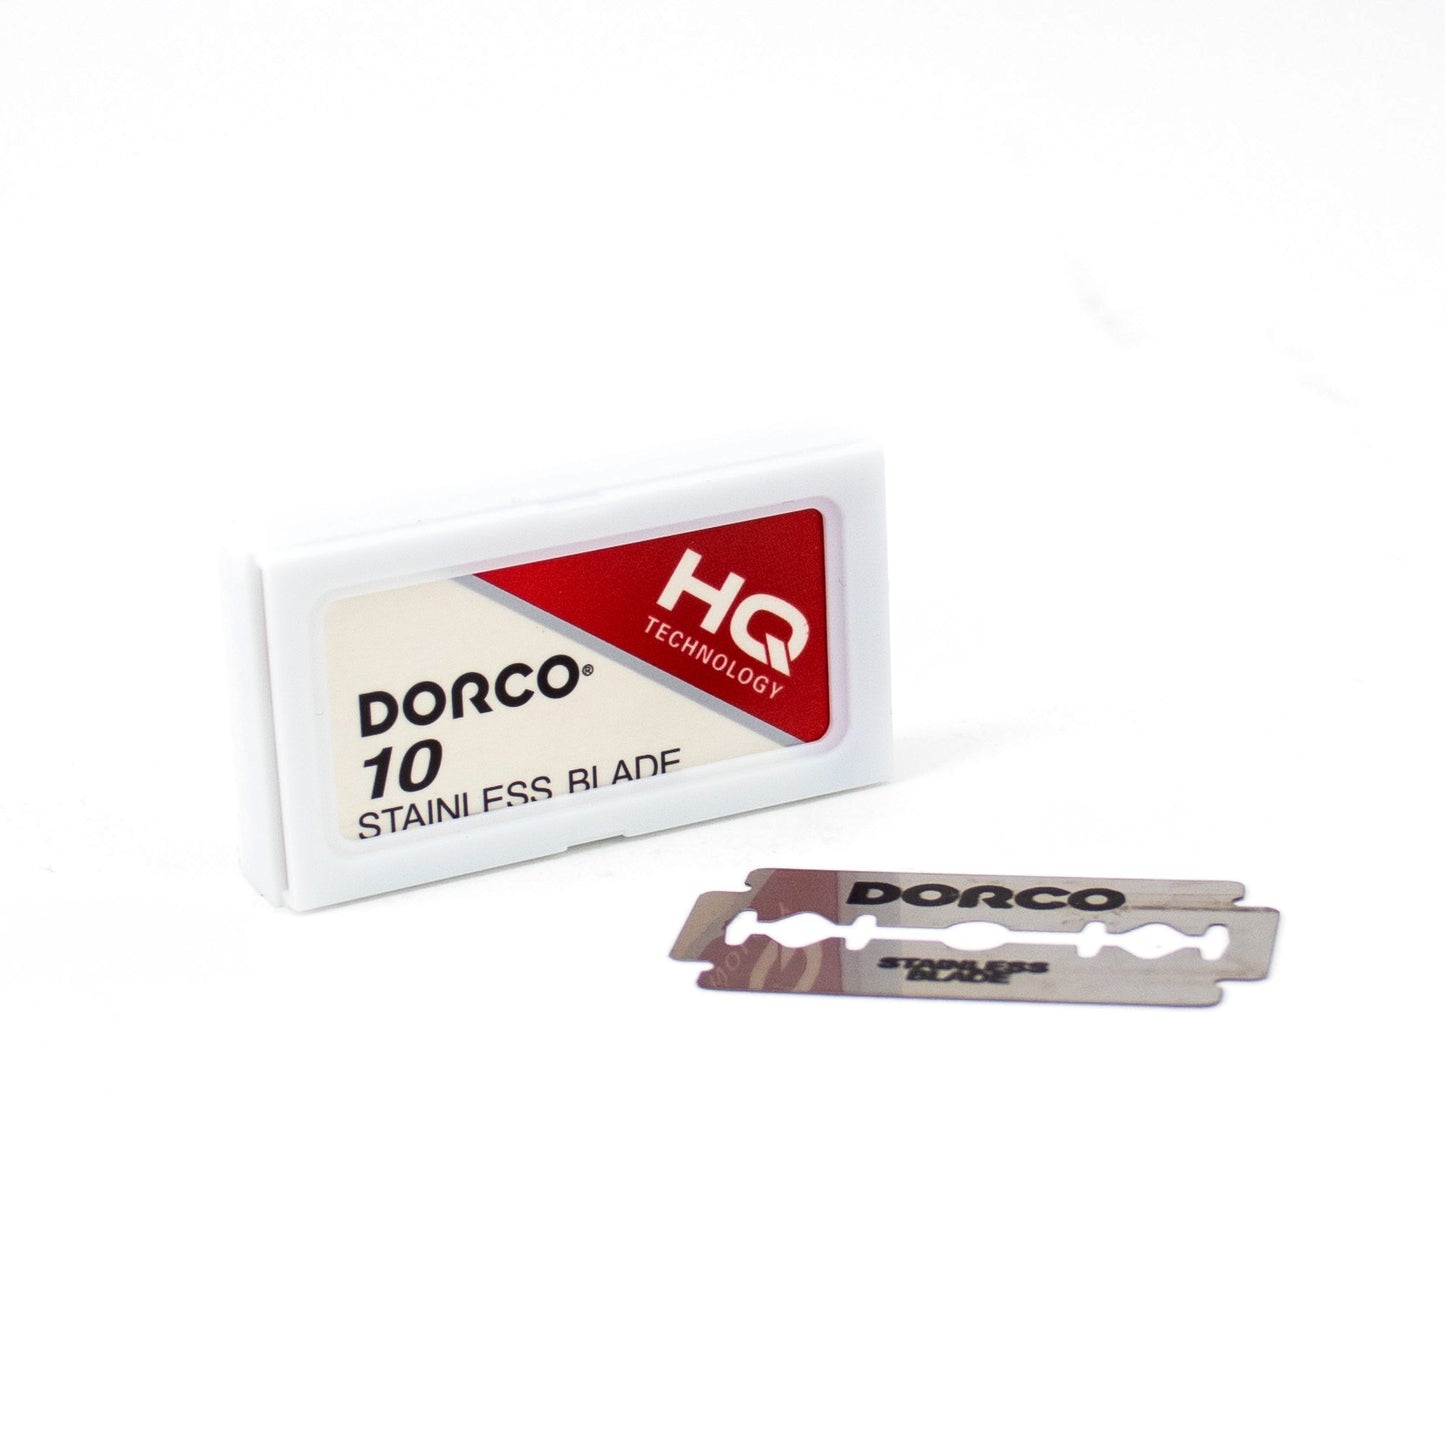 Dorco Stainless Double Edge Blades (1 x 10)